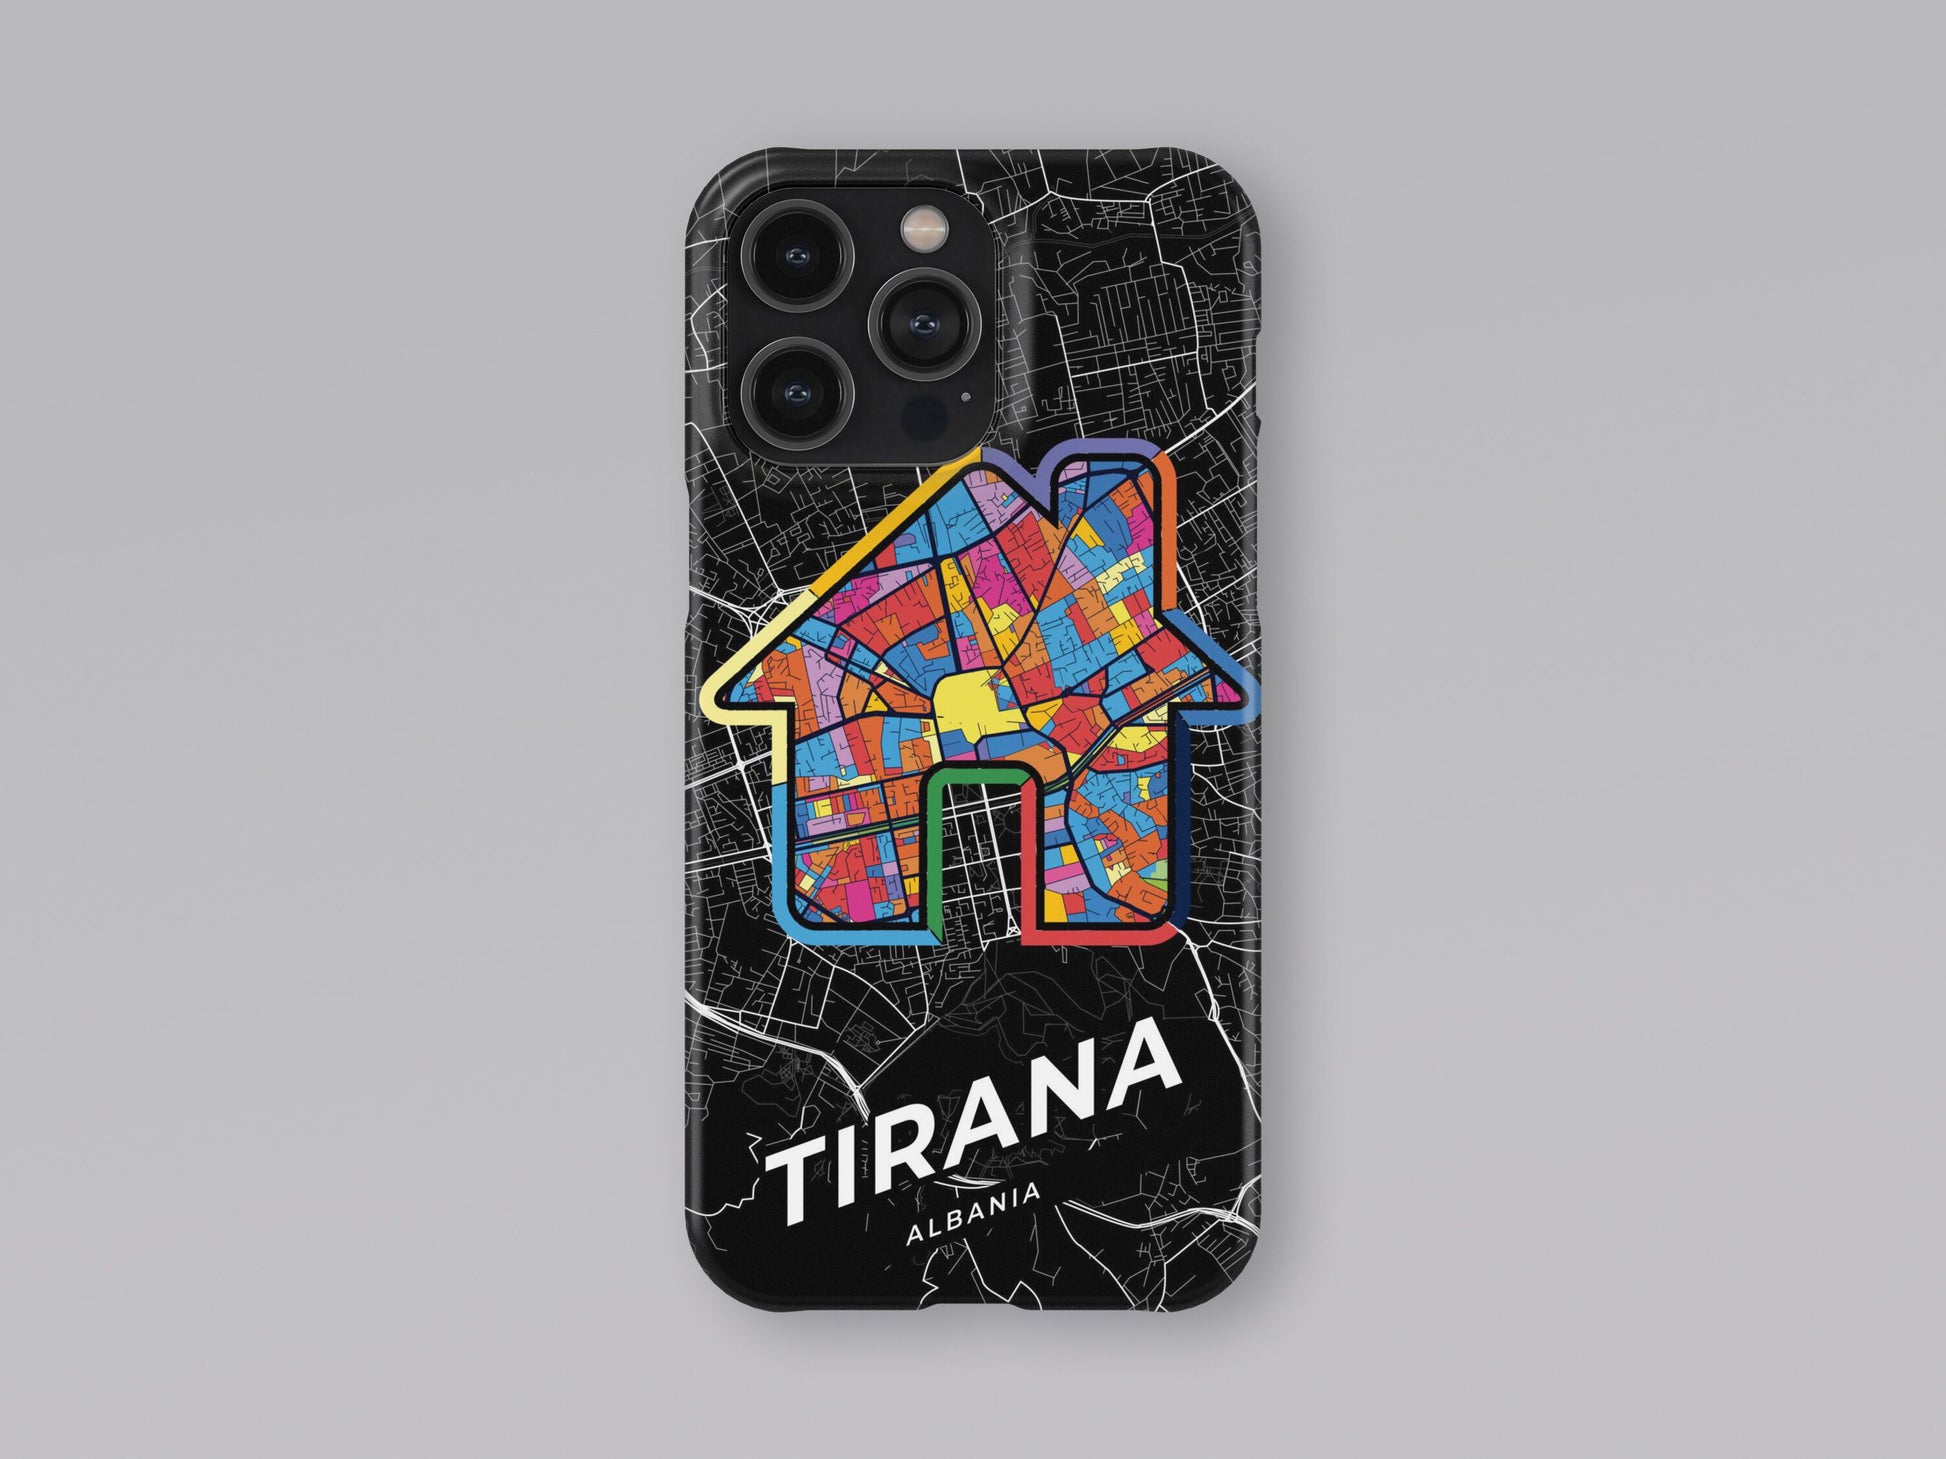 Tirana Albania slim phone case with colorful icon. Birthday, wedding or housewarming gift. Couple match cases. 3